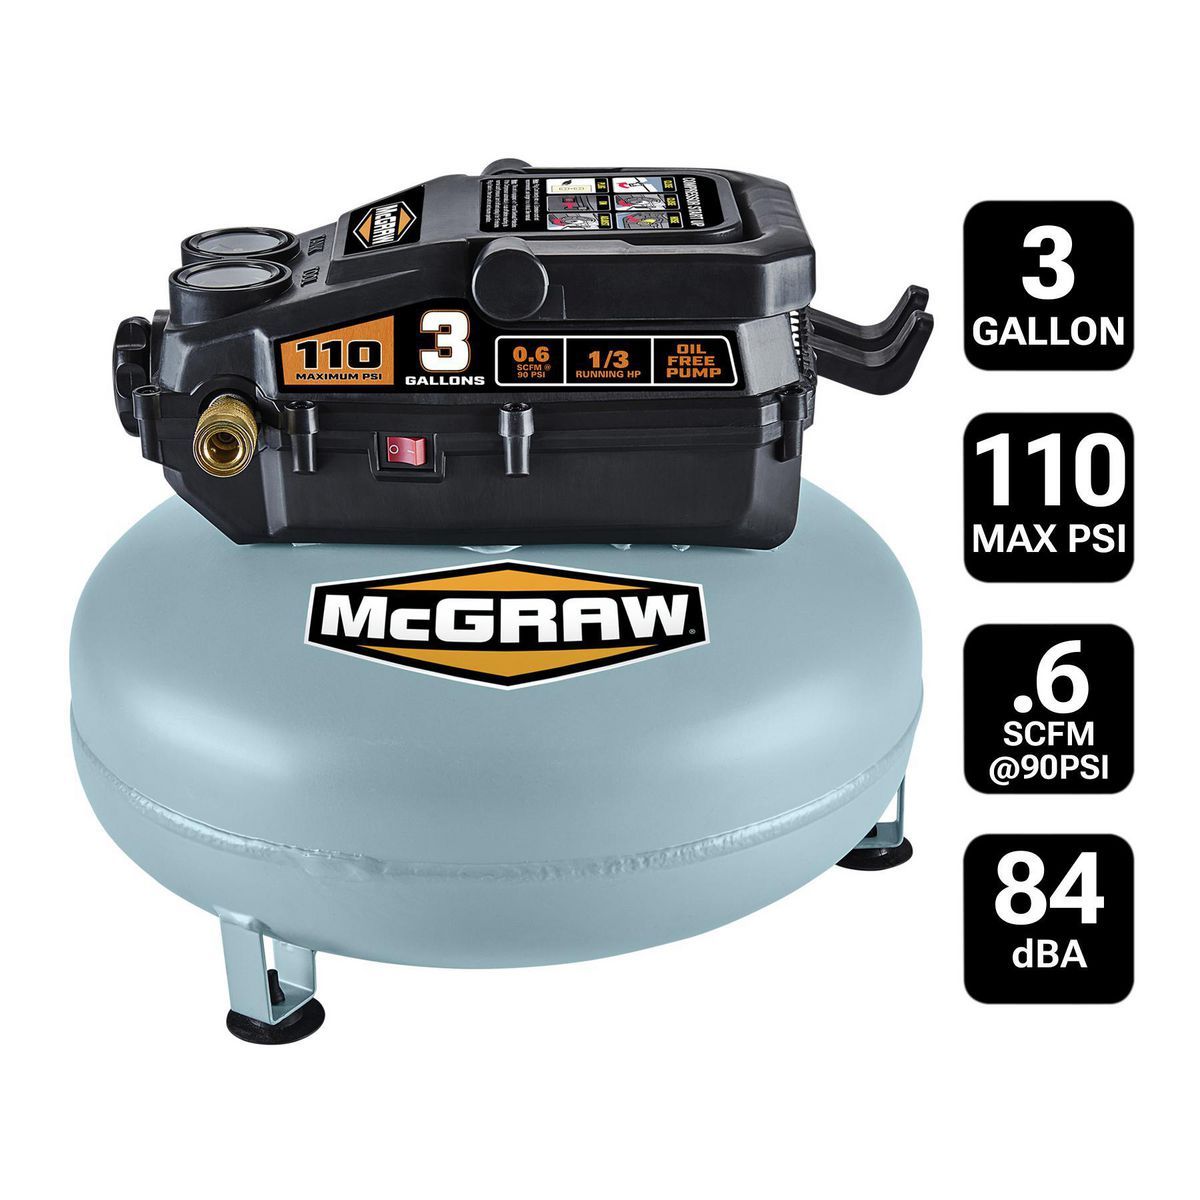 MCGRAW 3 Gallon 1/3 HP 110 PSI Oil-Free Pancake Air Compressor – Item